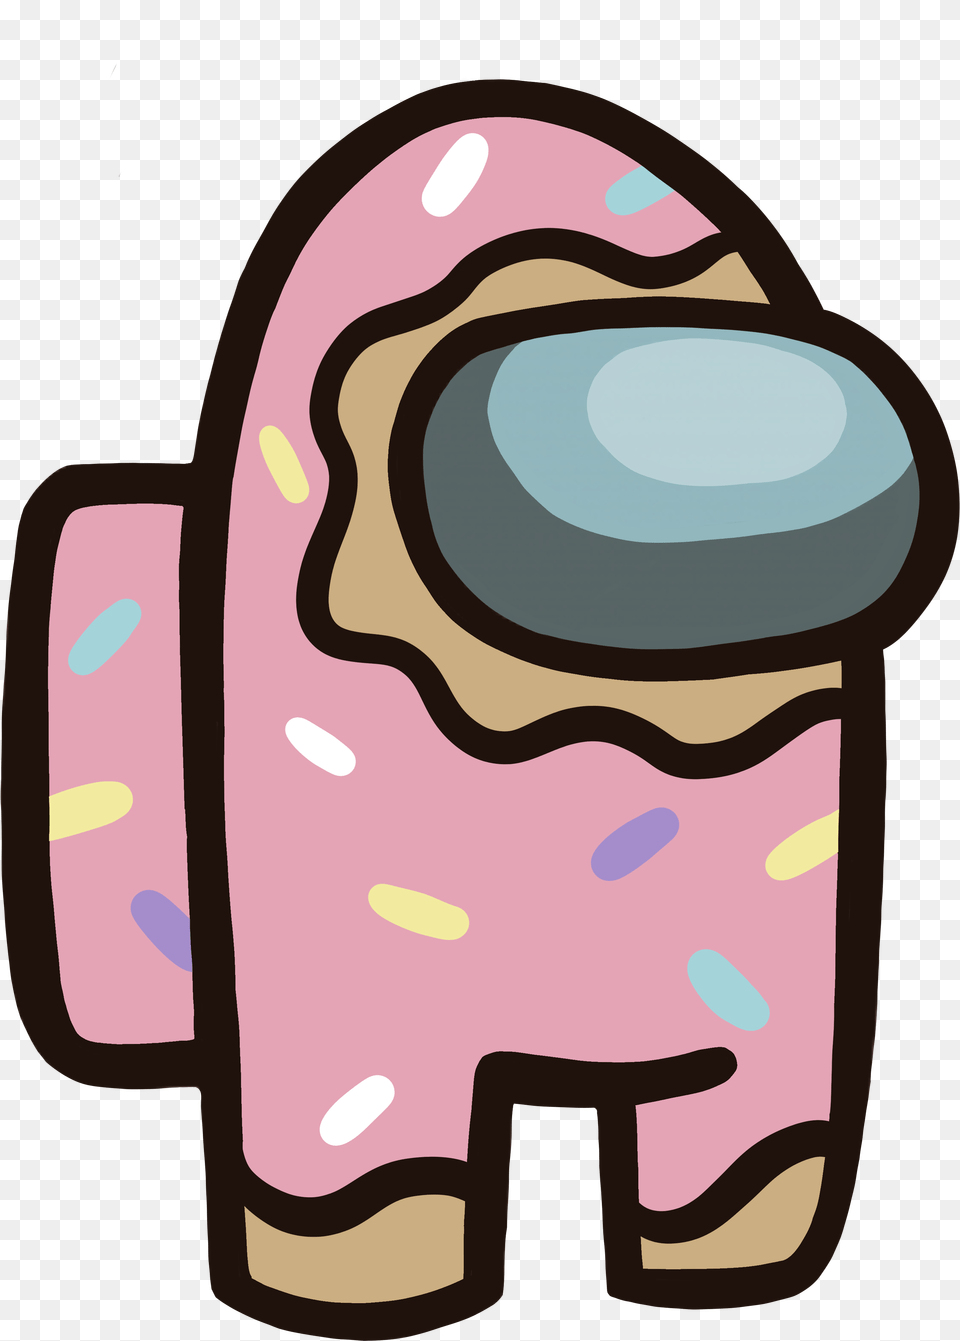 Cartoon Wallpaper Iphone Among Us Donut, Food, Sweets, Smoke Pipe Png Image